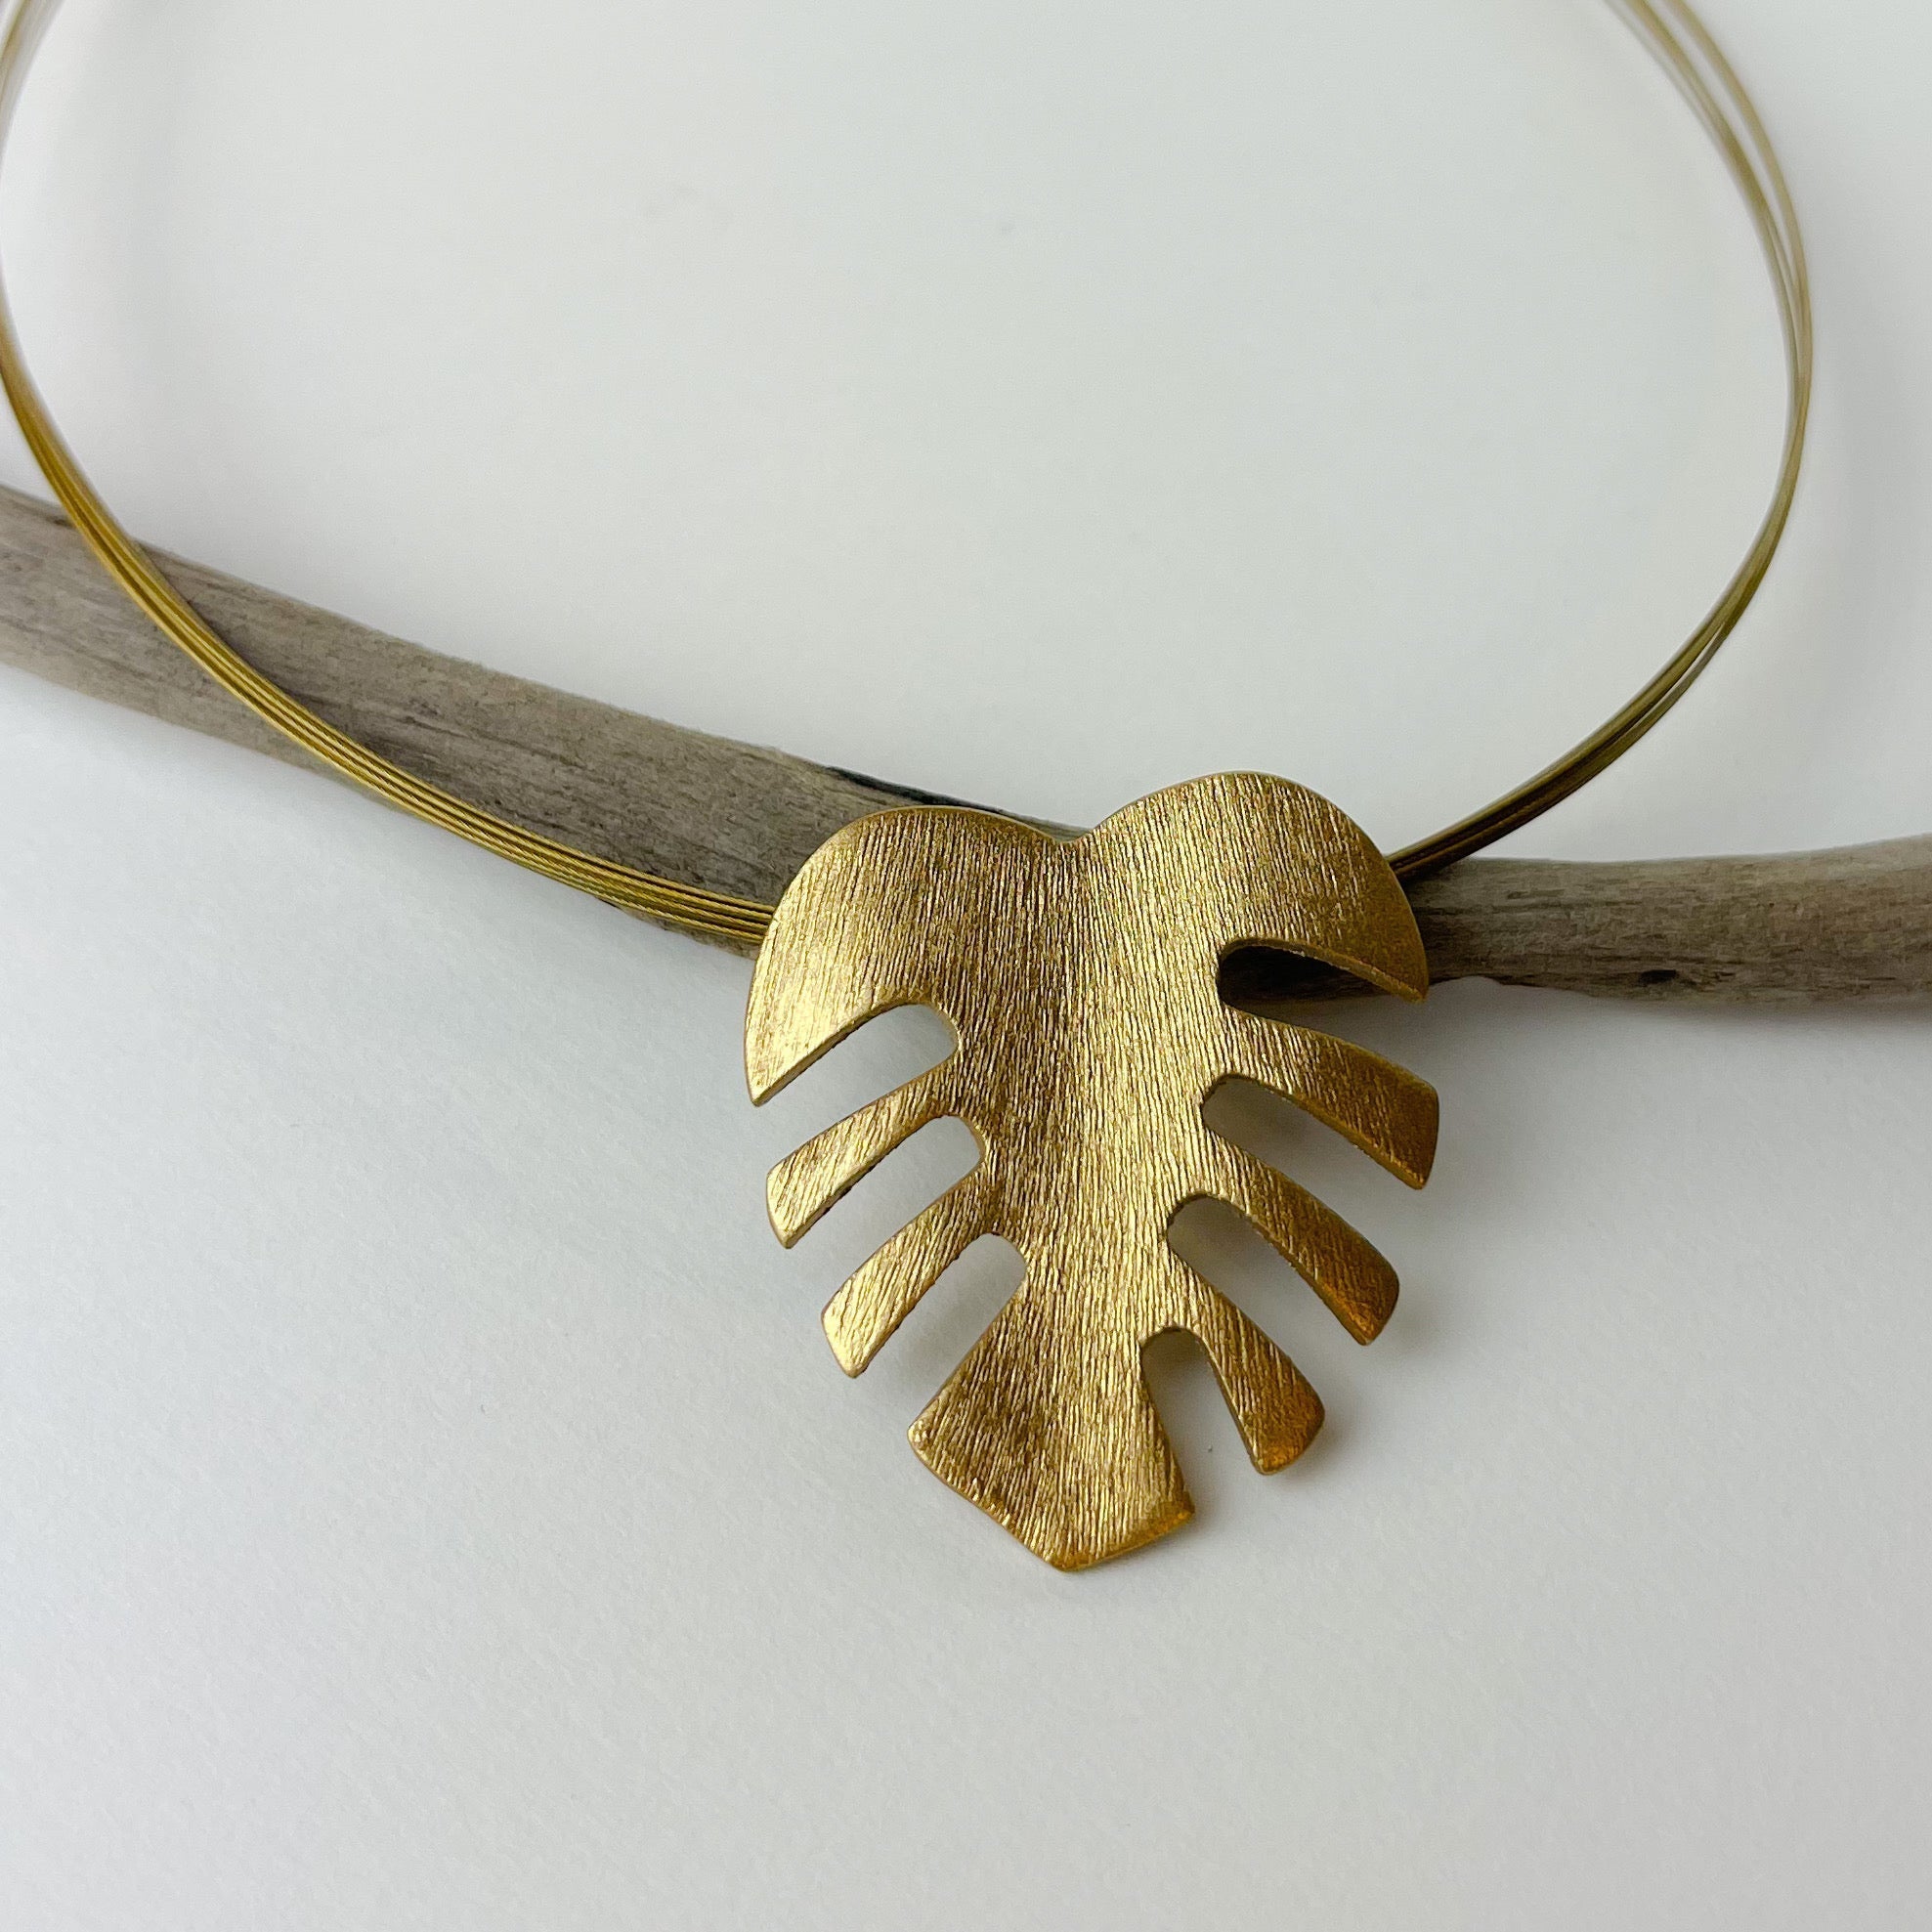 Marked Gold Palm Leaf Necklace - The Nancy Smillie Shop - Art, Jewellery & Designer Gifts Glasgow